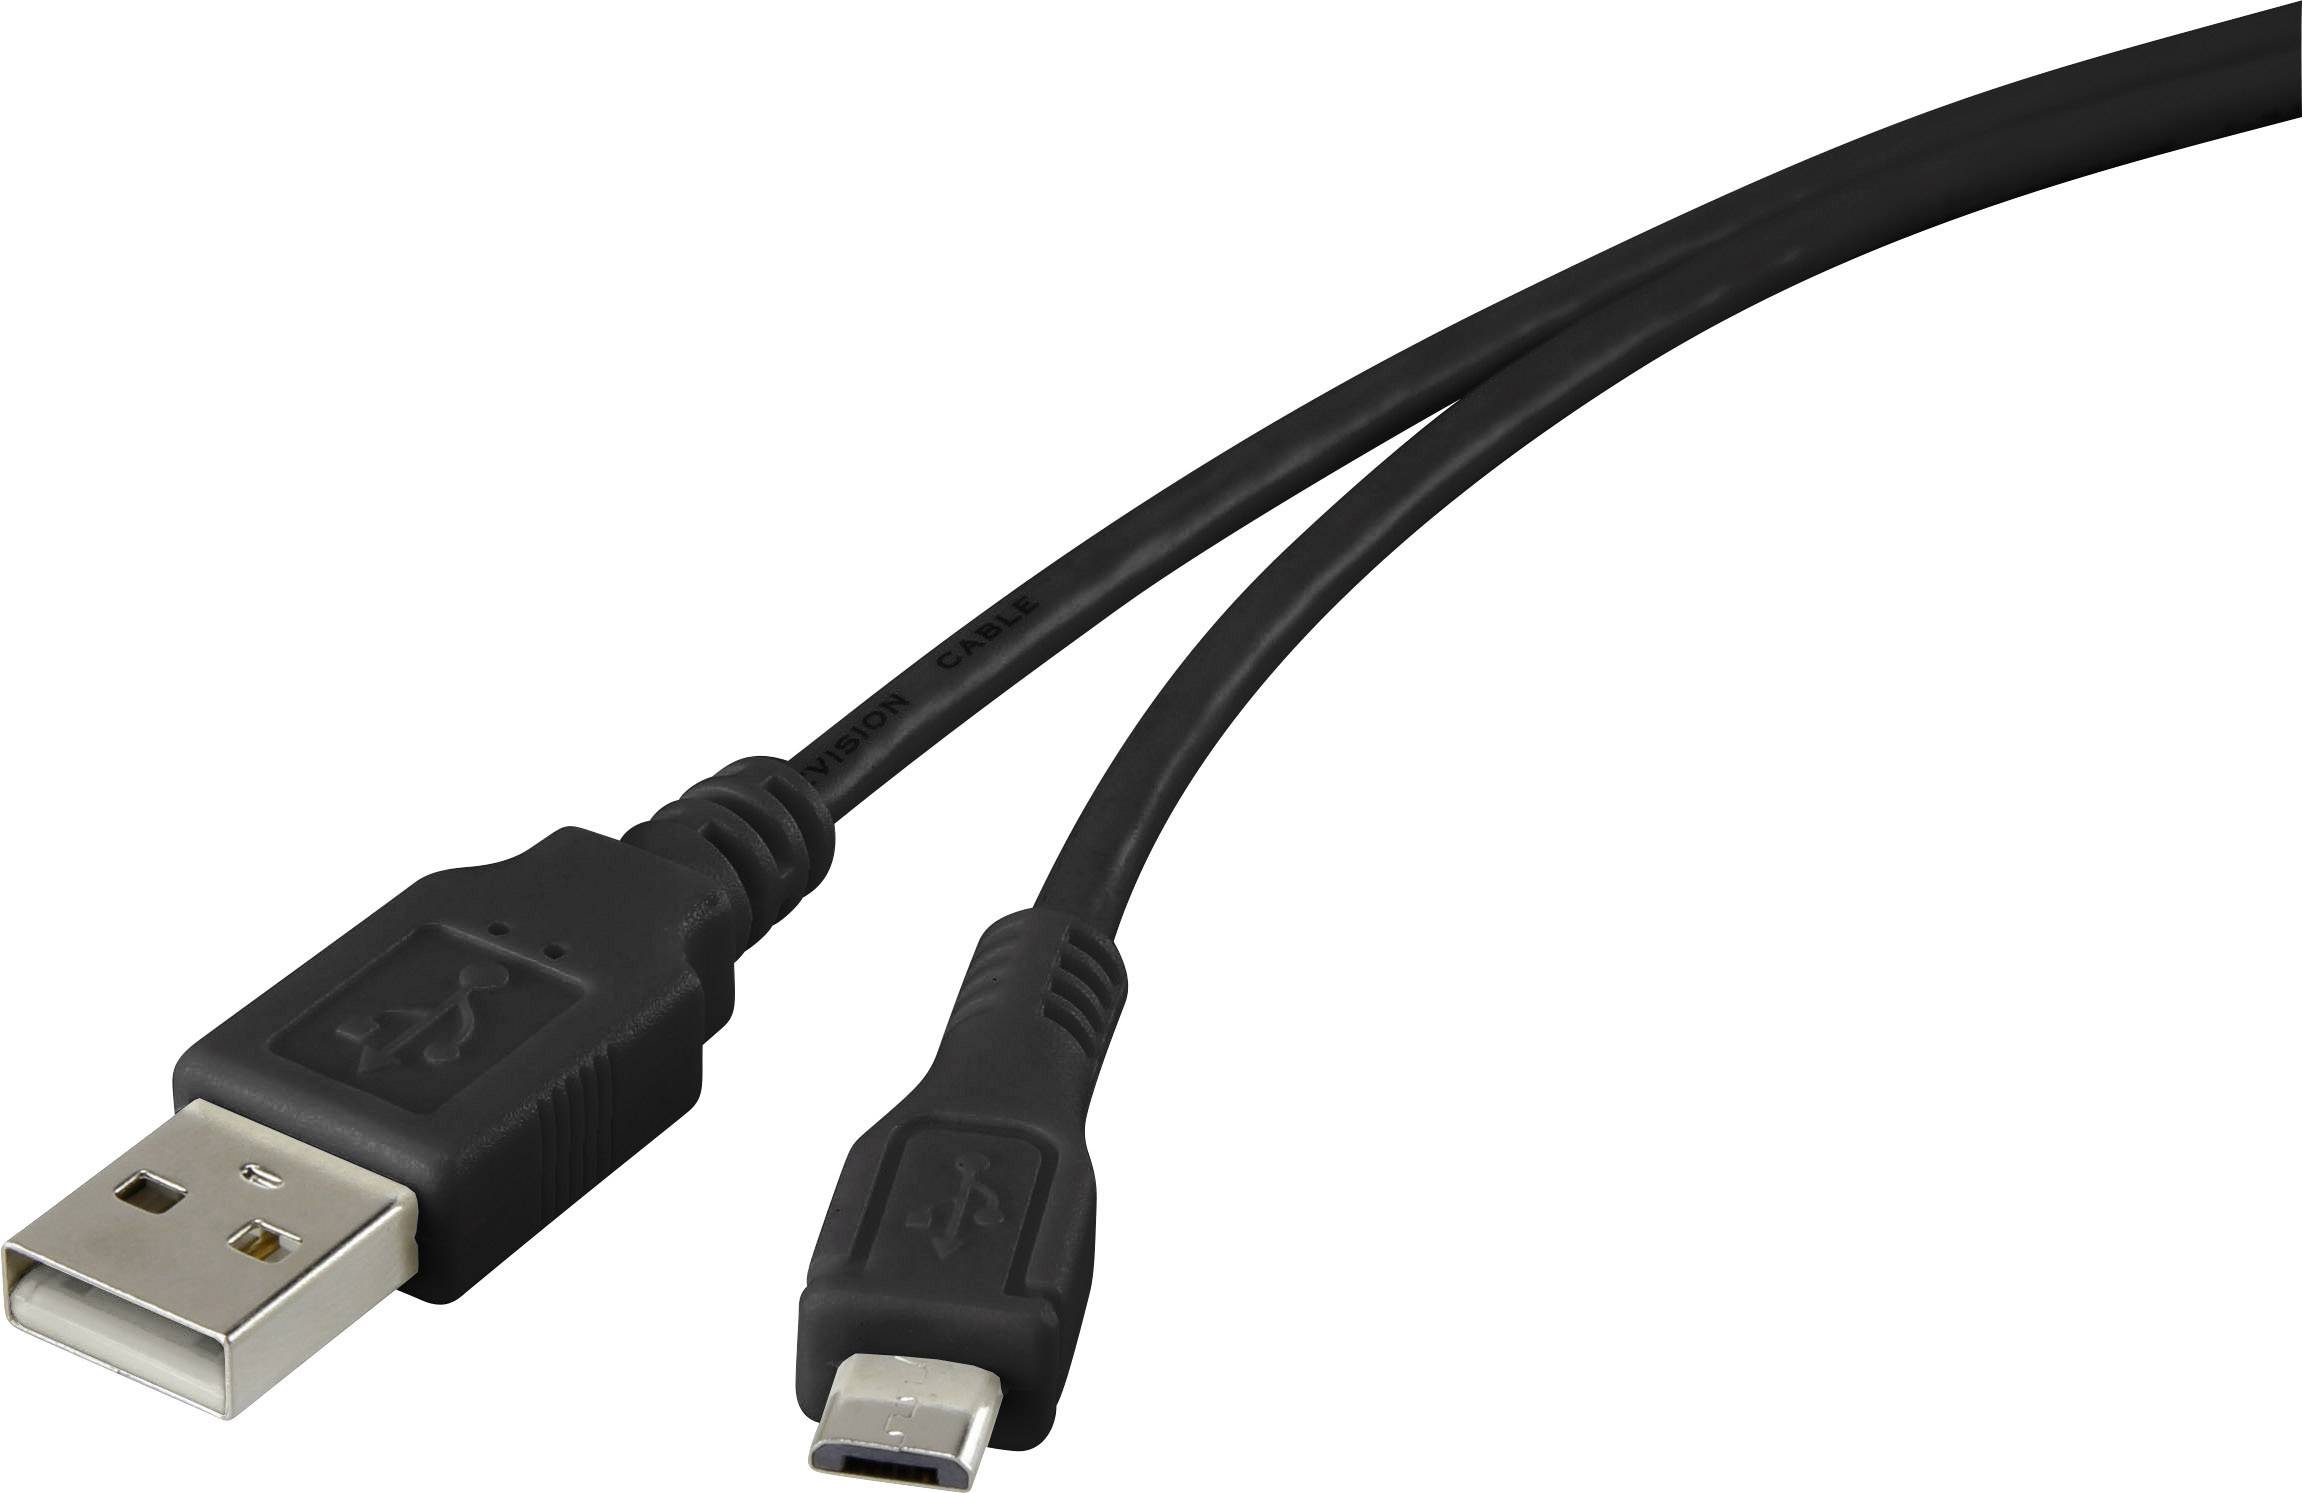 CONRAD Renkforce USB 2.0 Kabel [1x USB 2.0 Stecker A - 1x USB 2.0 Stecker Micro-B] 1 m Schwarz vergo